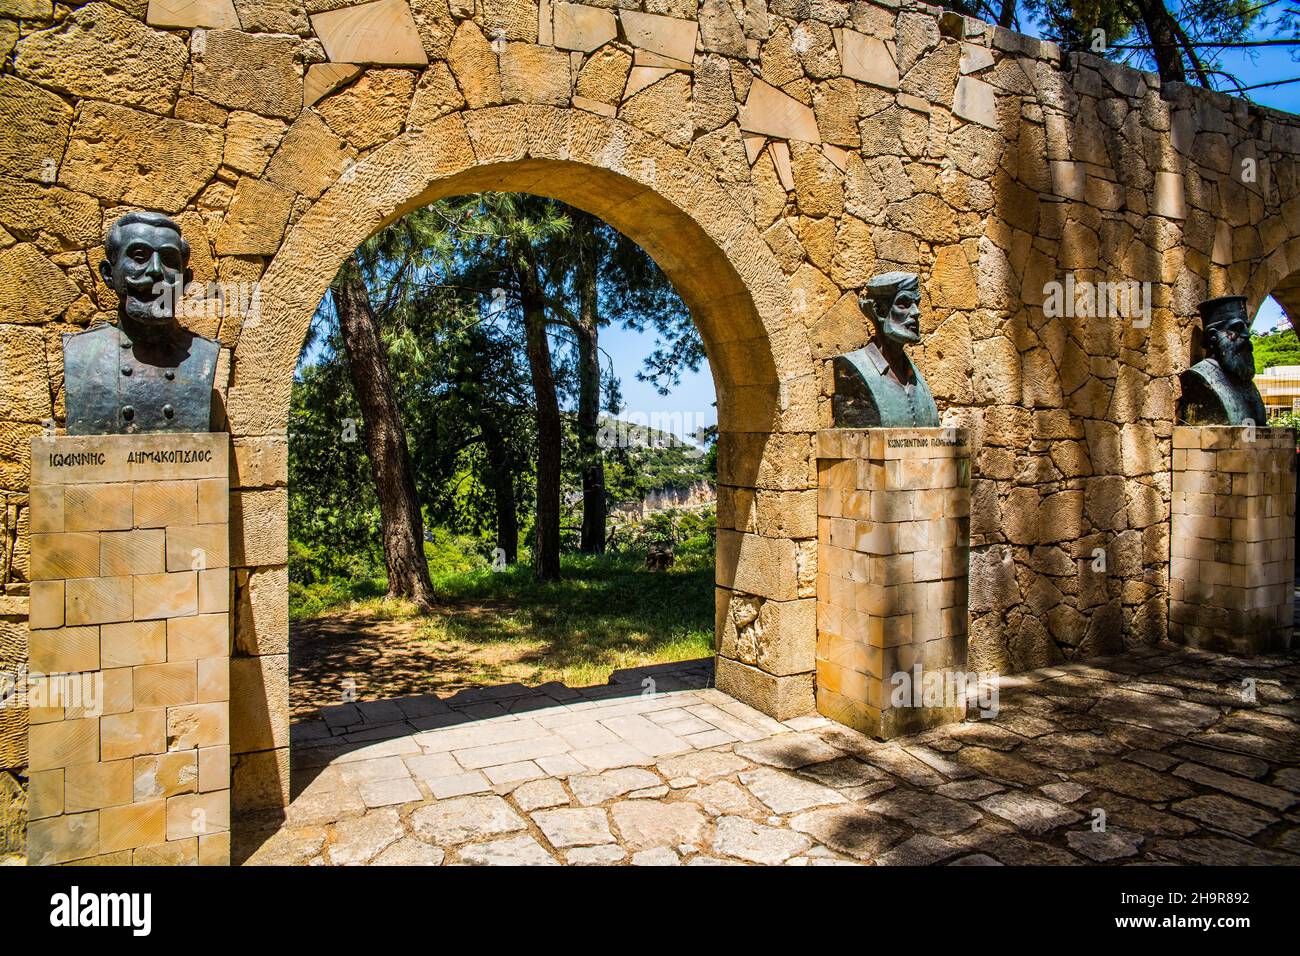 Monument to the Aufstaentischen, most important national monument of Crete, Moni Arkadi, Moni Arkadi, Crete, Greece Stock Photo